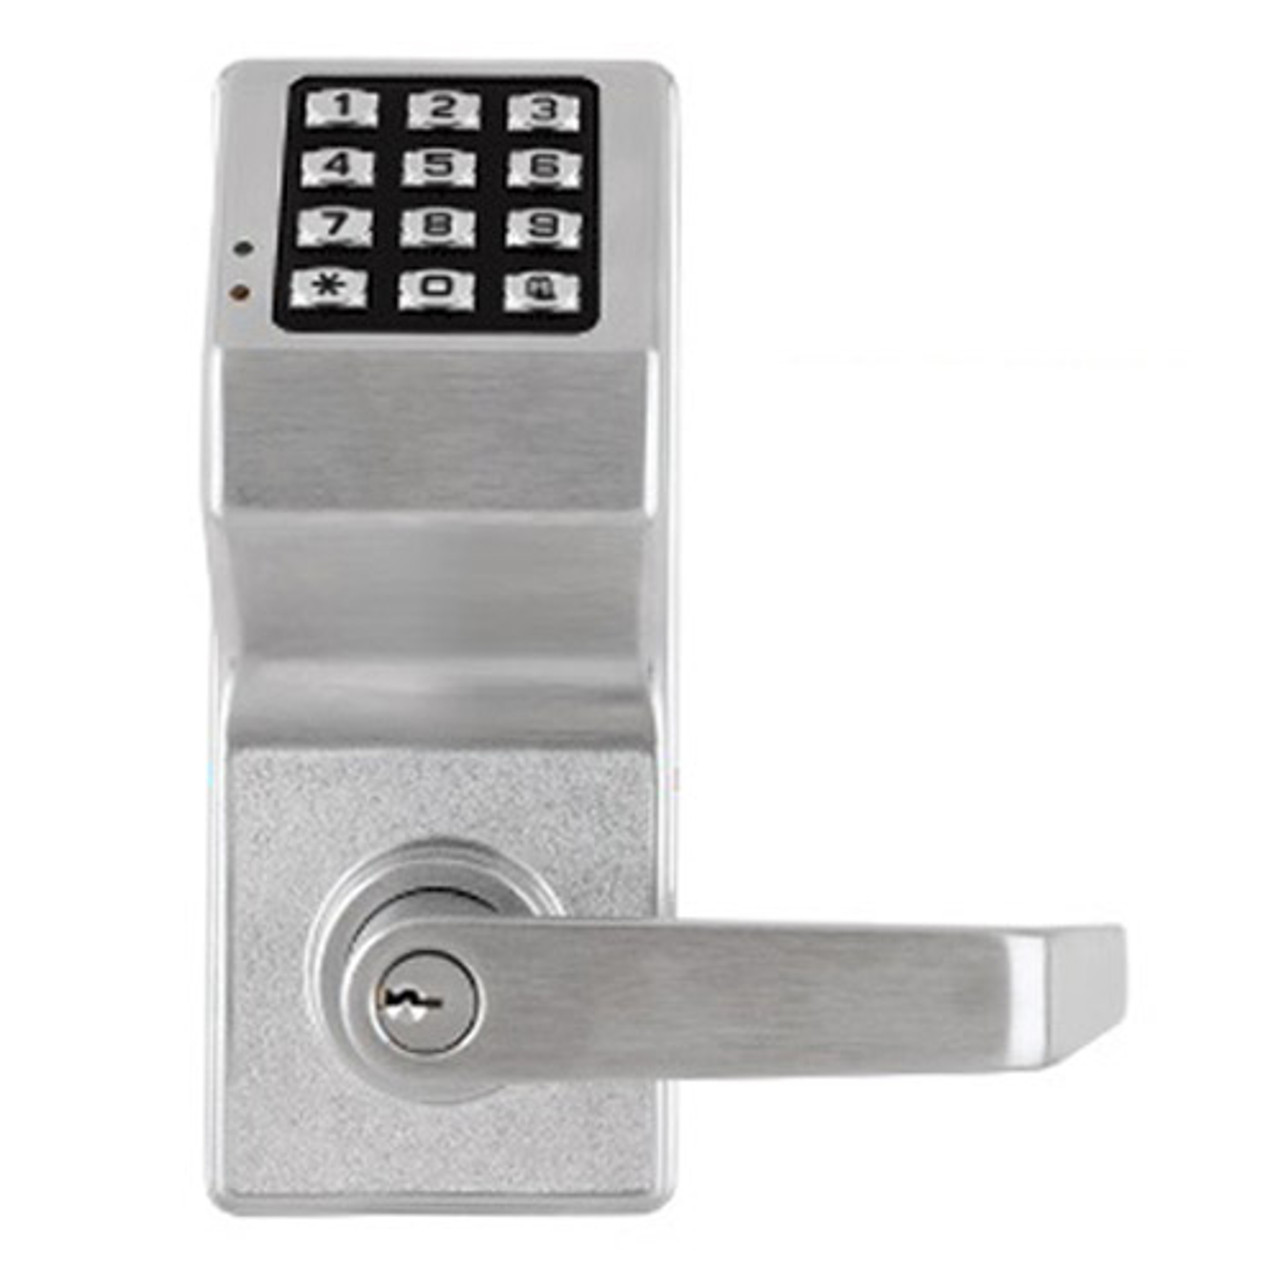 DL3200IC-S-US26D Alarm Lock Trilogy Electronic Digital Lock in Satin Chrome Finish